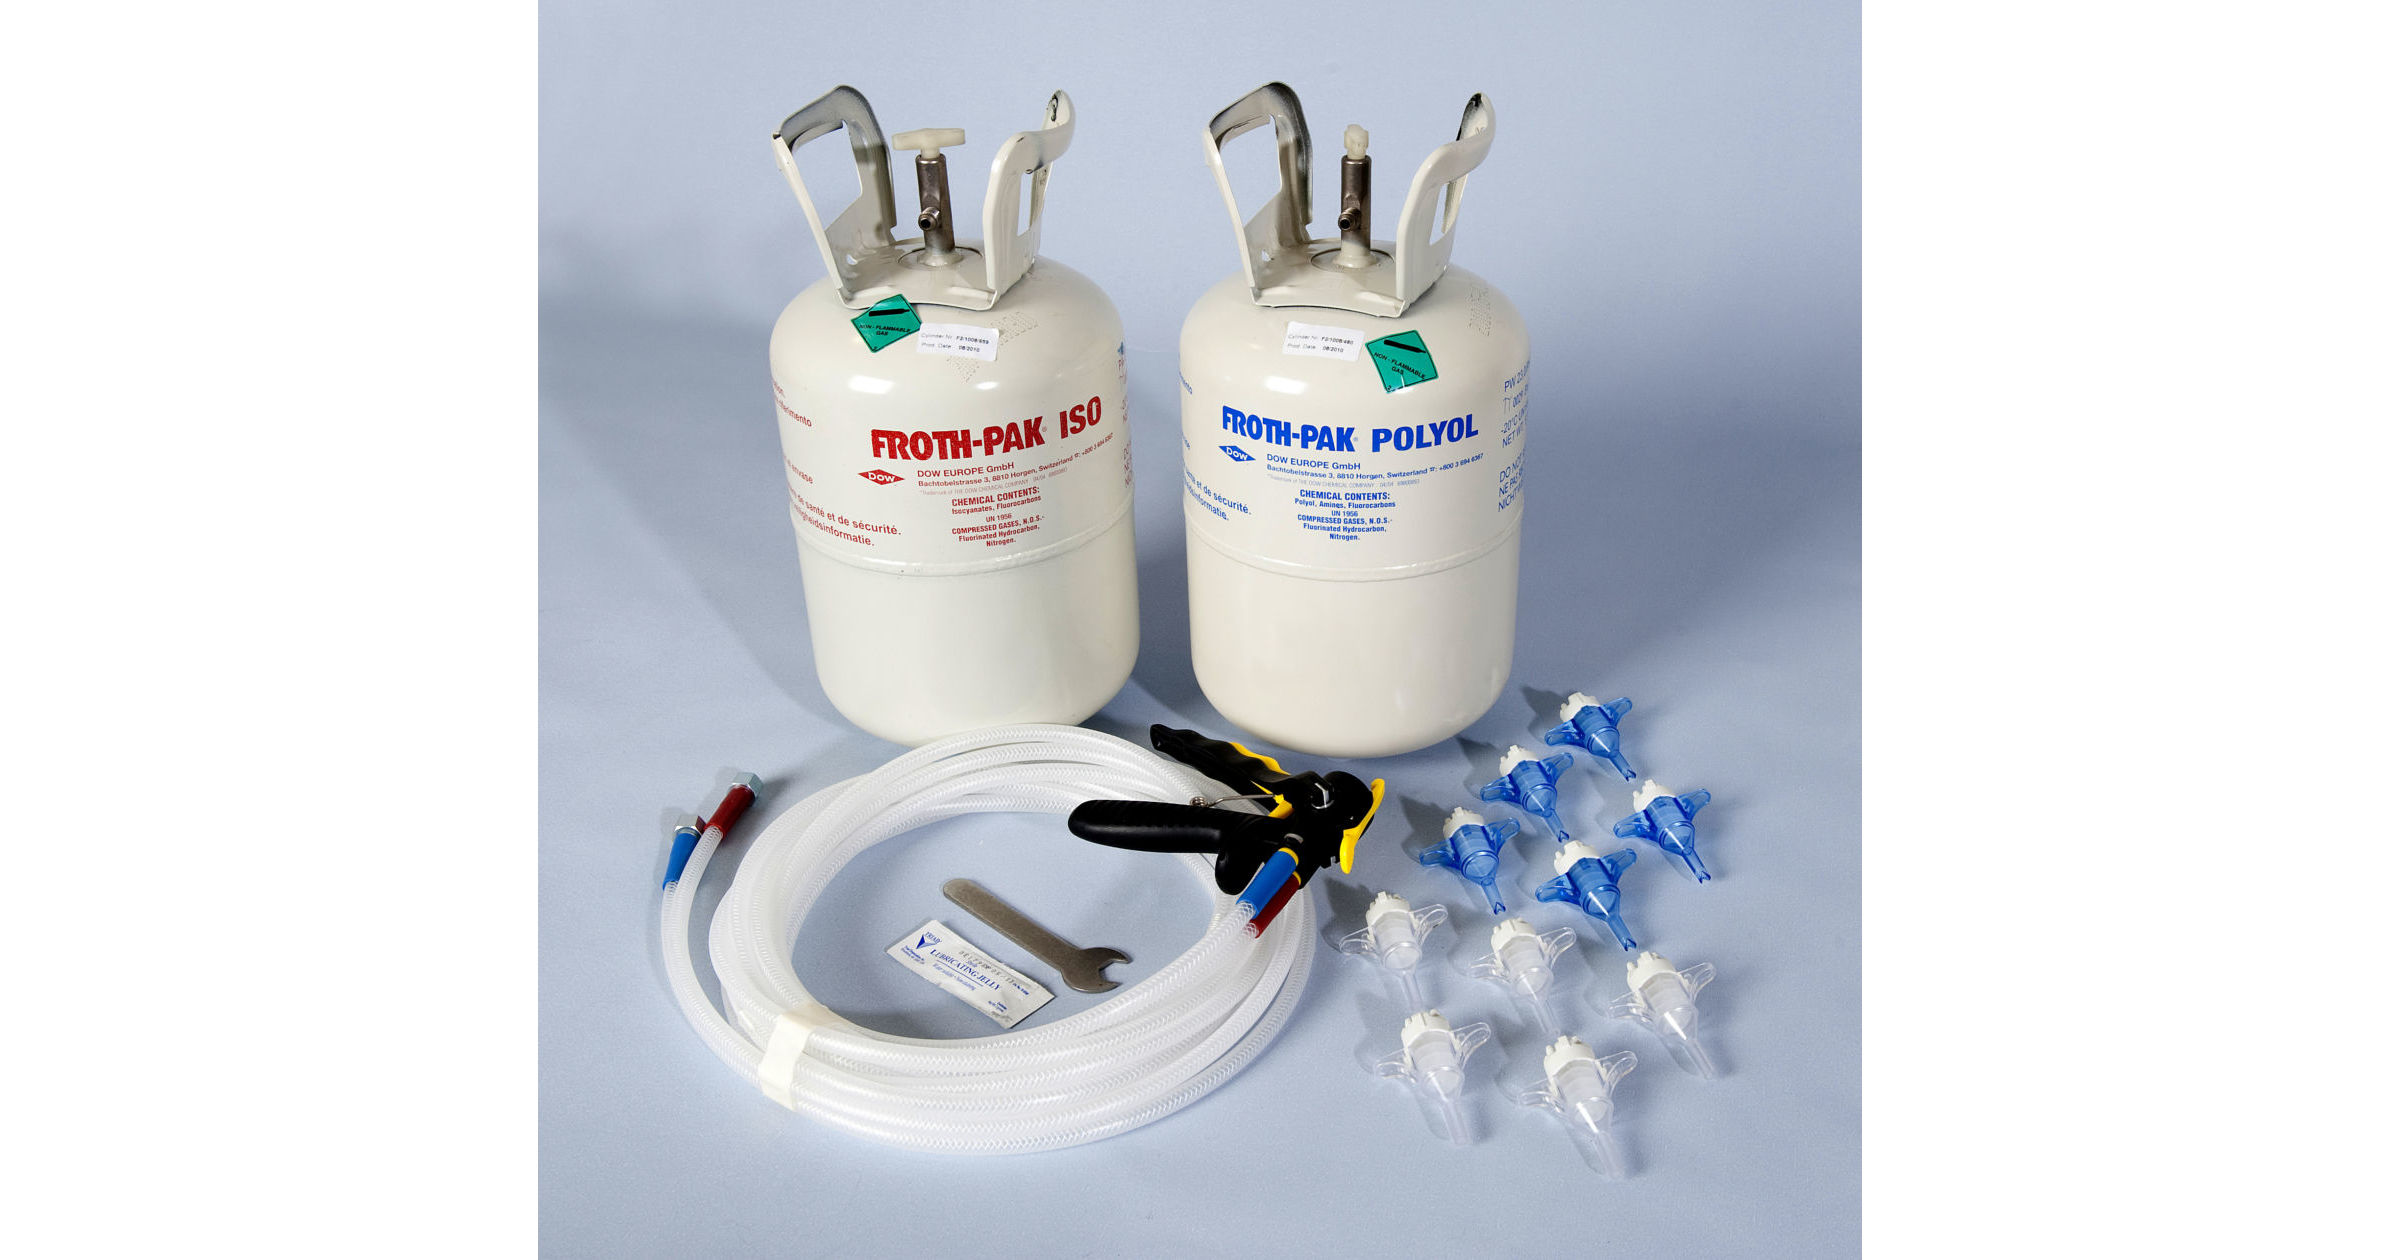 spray foam insulation kits (product player)